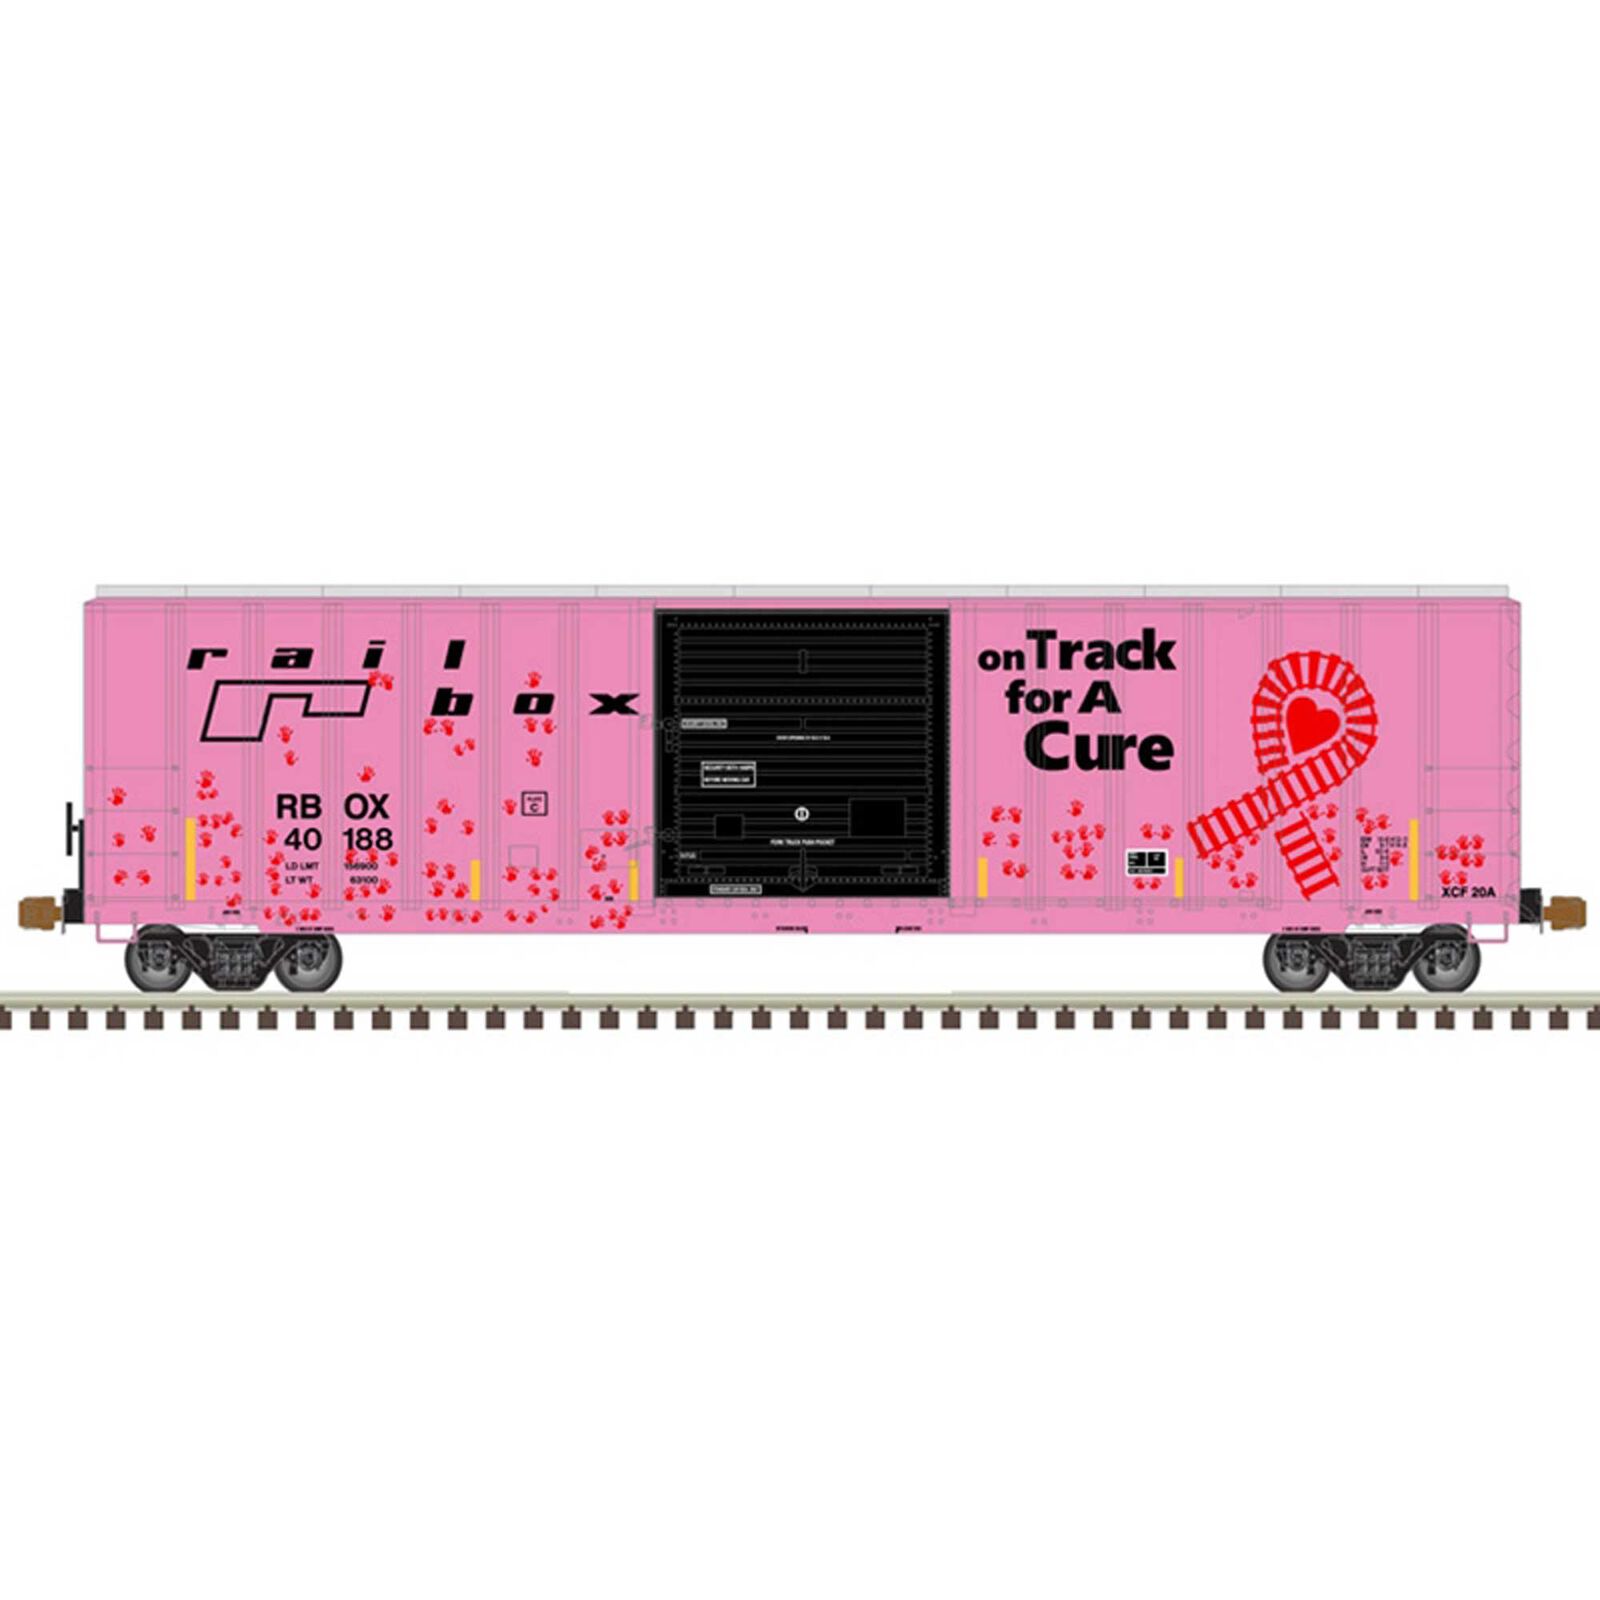 Railbox 40188 "Hand Prints" (Pink Black)